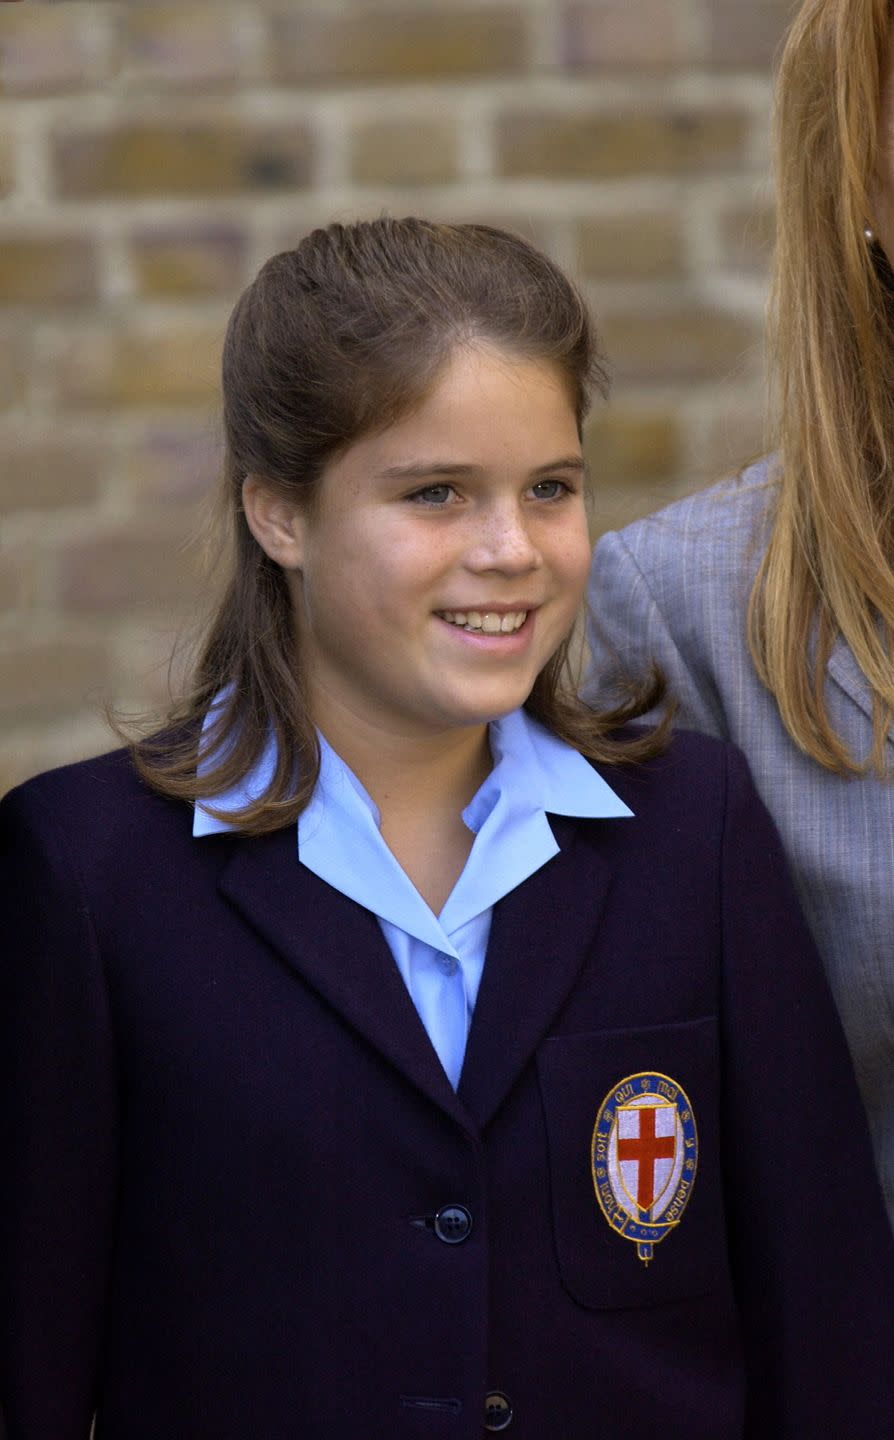 17) Princess Eugenie at St Georges, Windsor